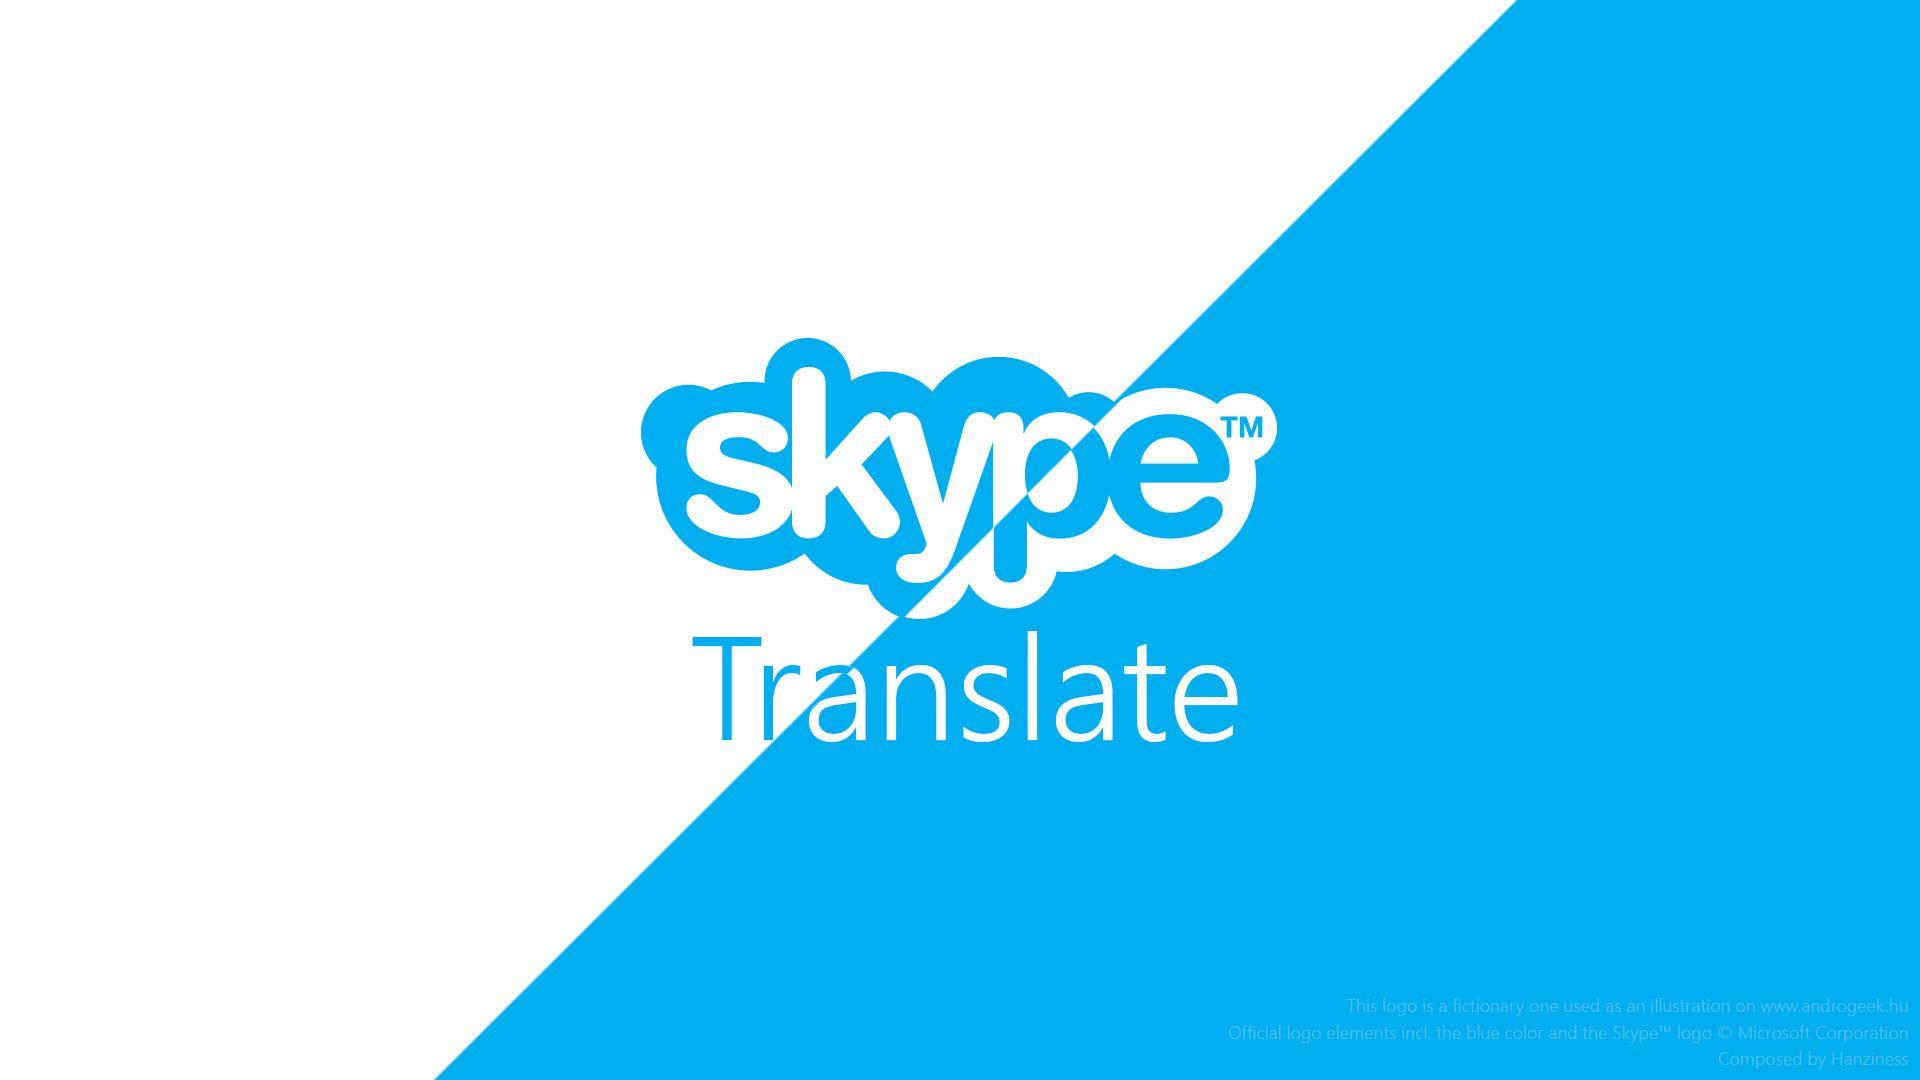 Official Skype Logo - How to set up and use Skype Translator